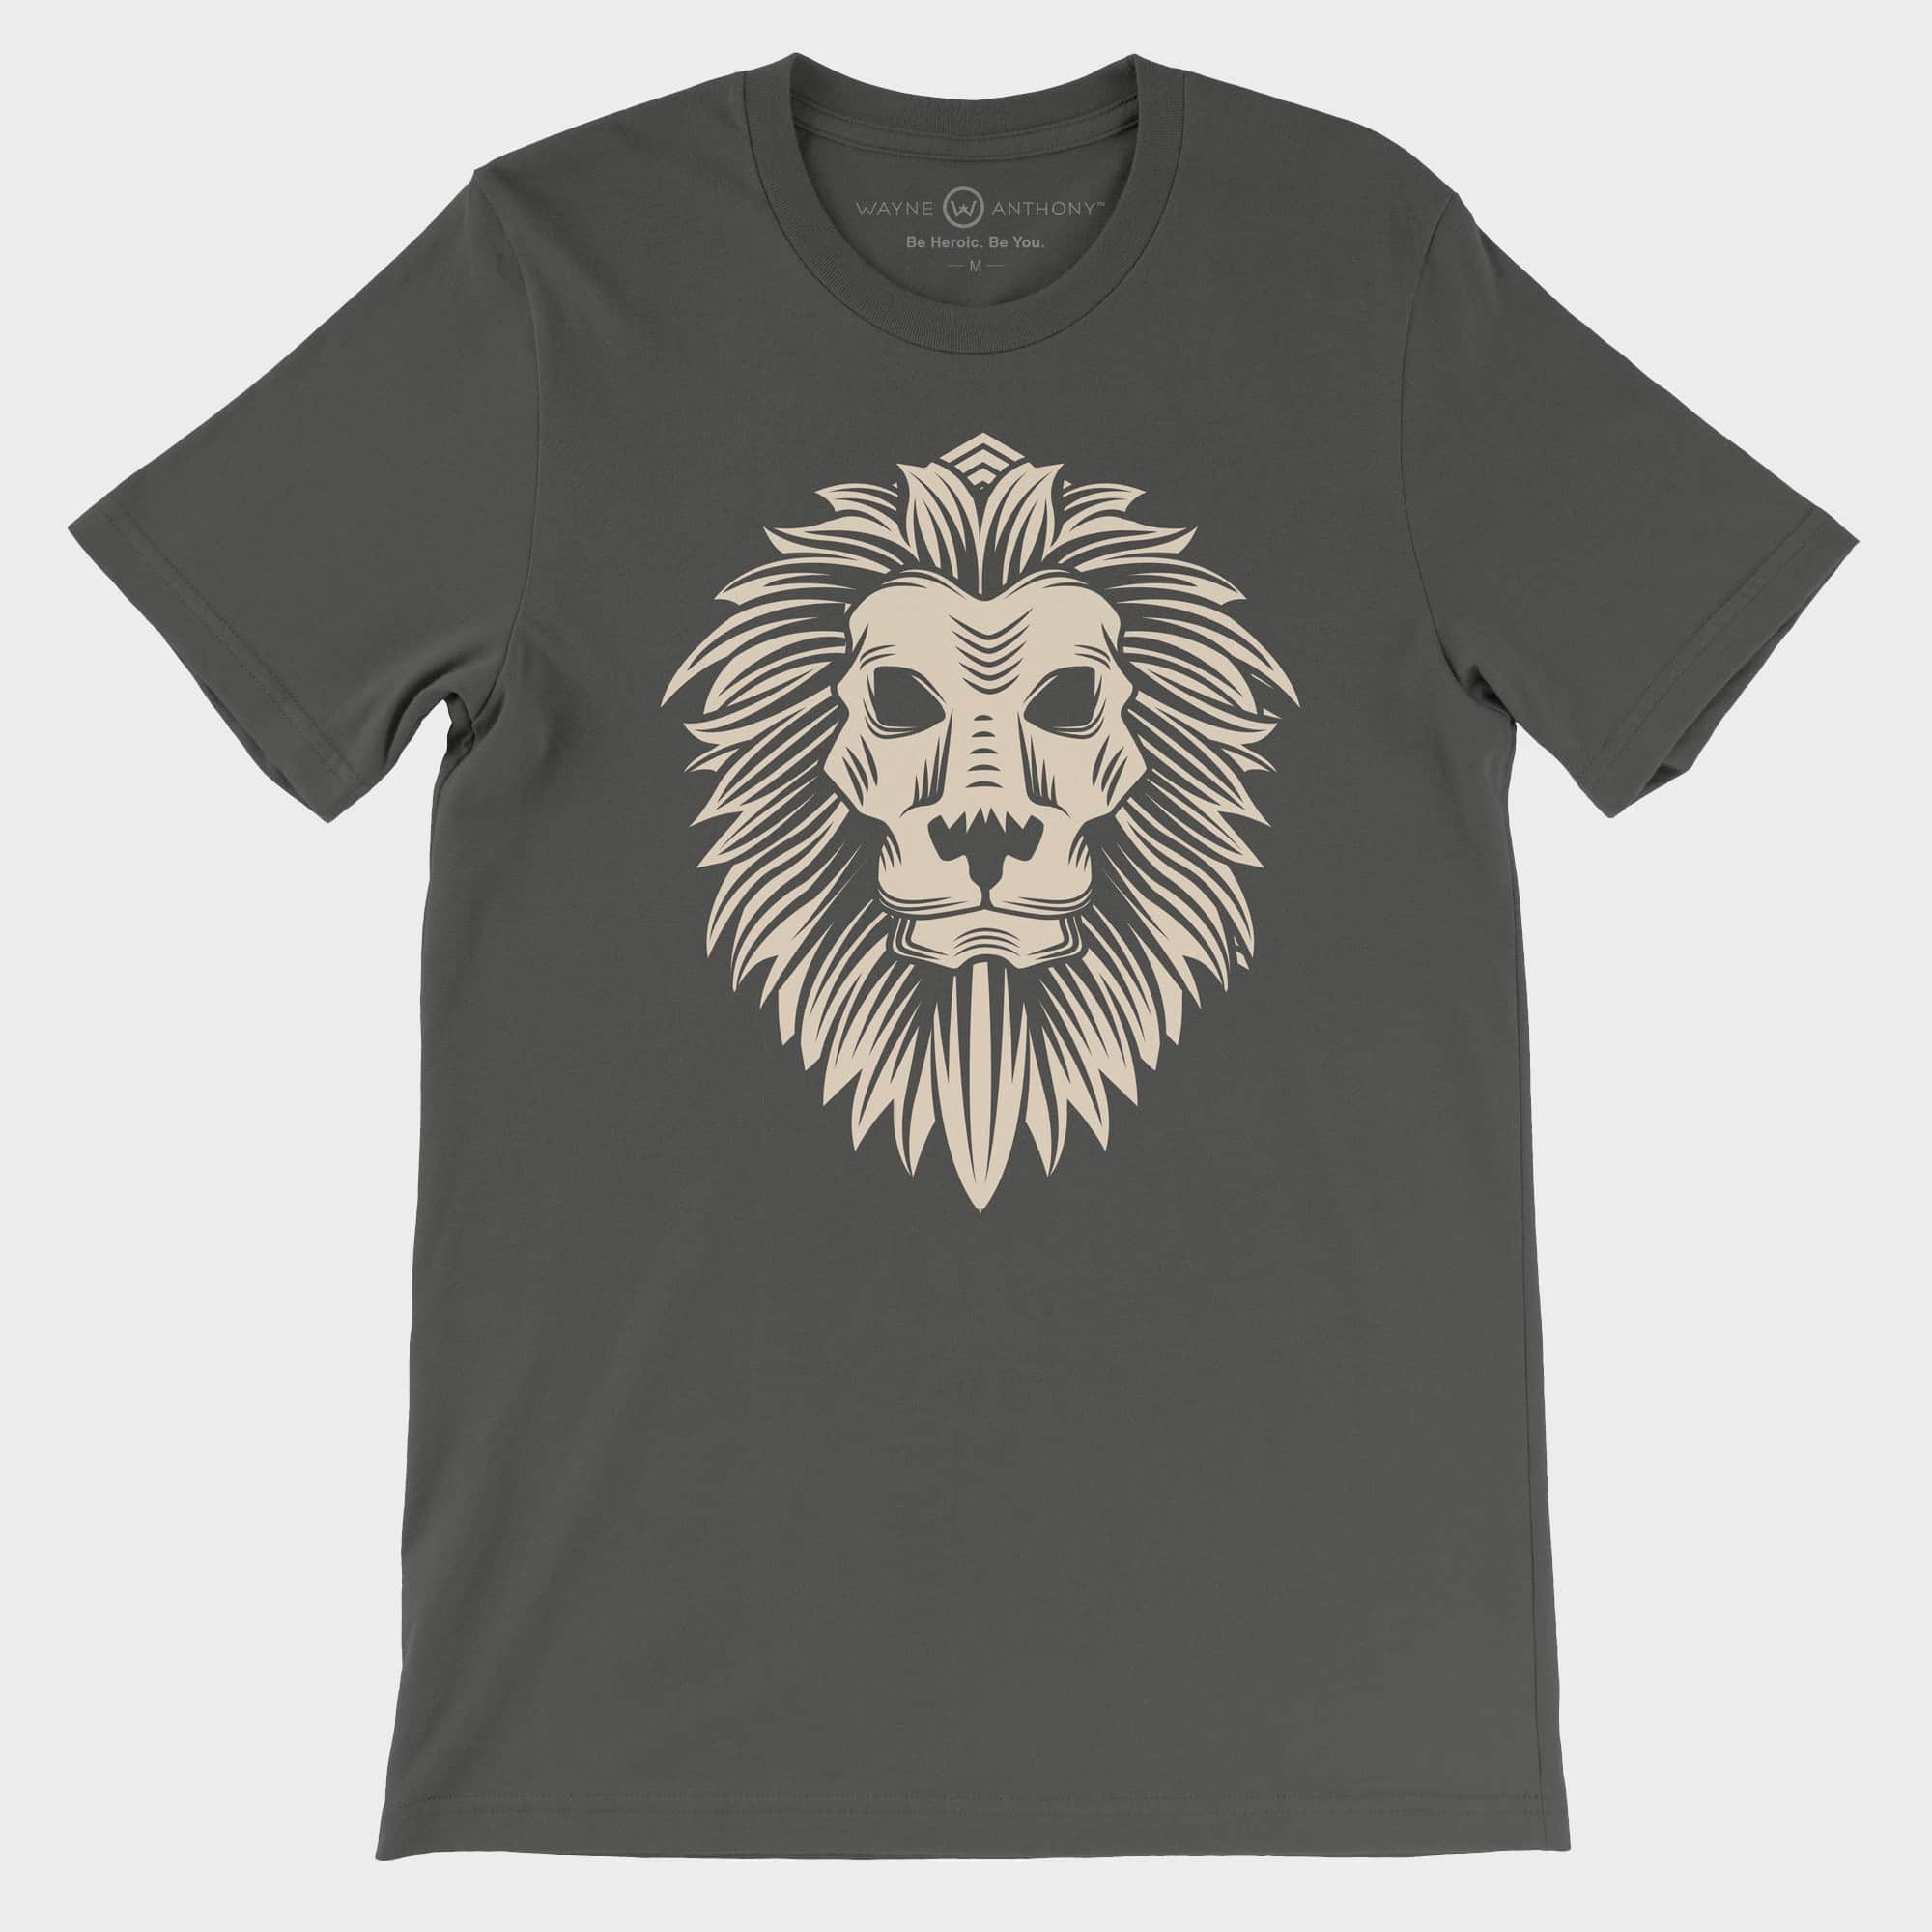 Heart of a Lion T-Shirt - Wayne Anthony